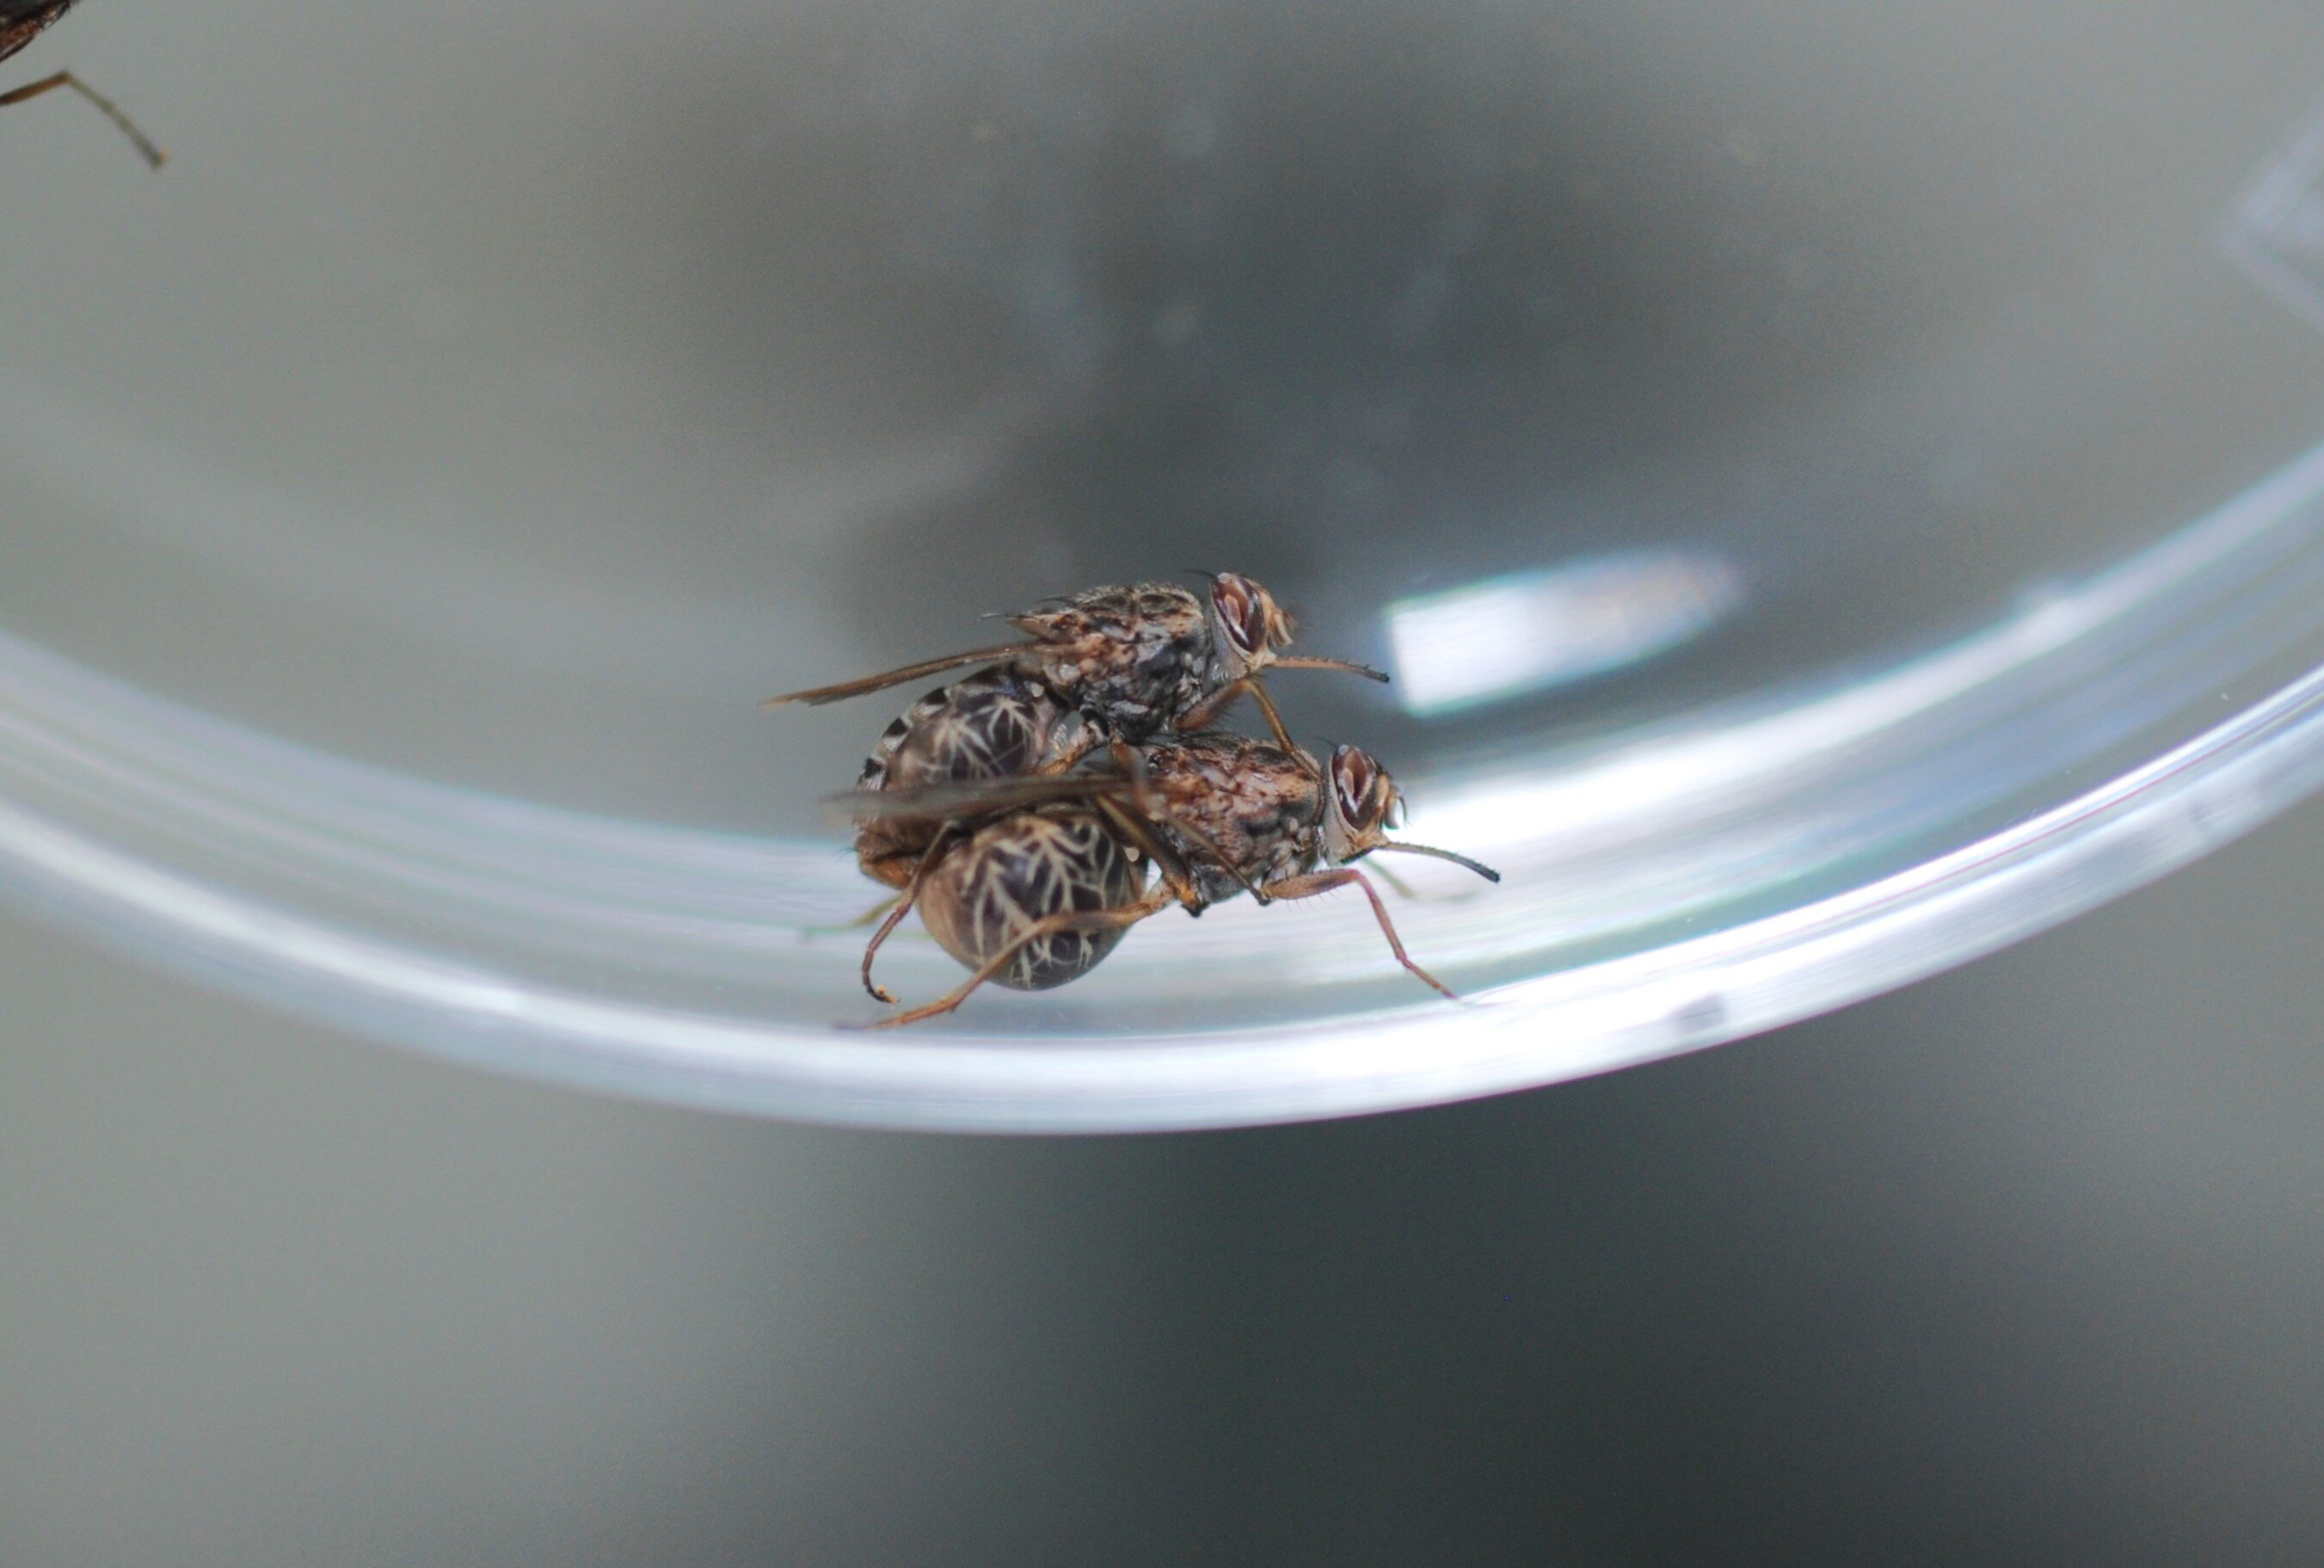 Tsetse fly fertility damaged after just one heat wave, study finds